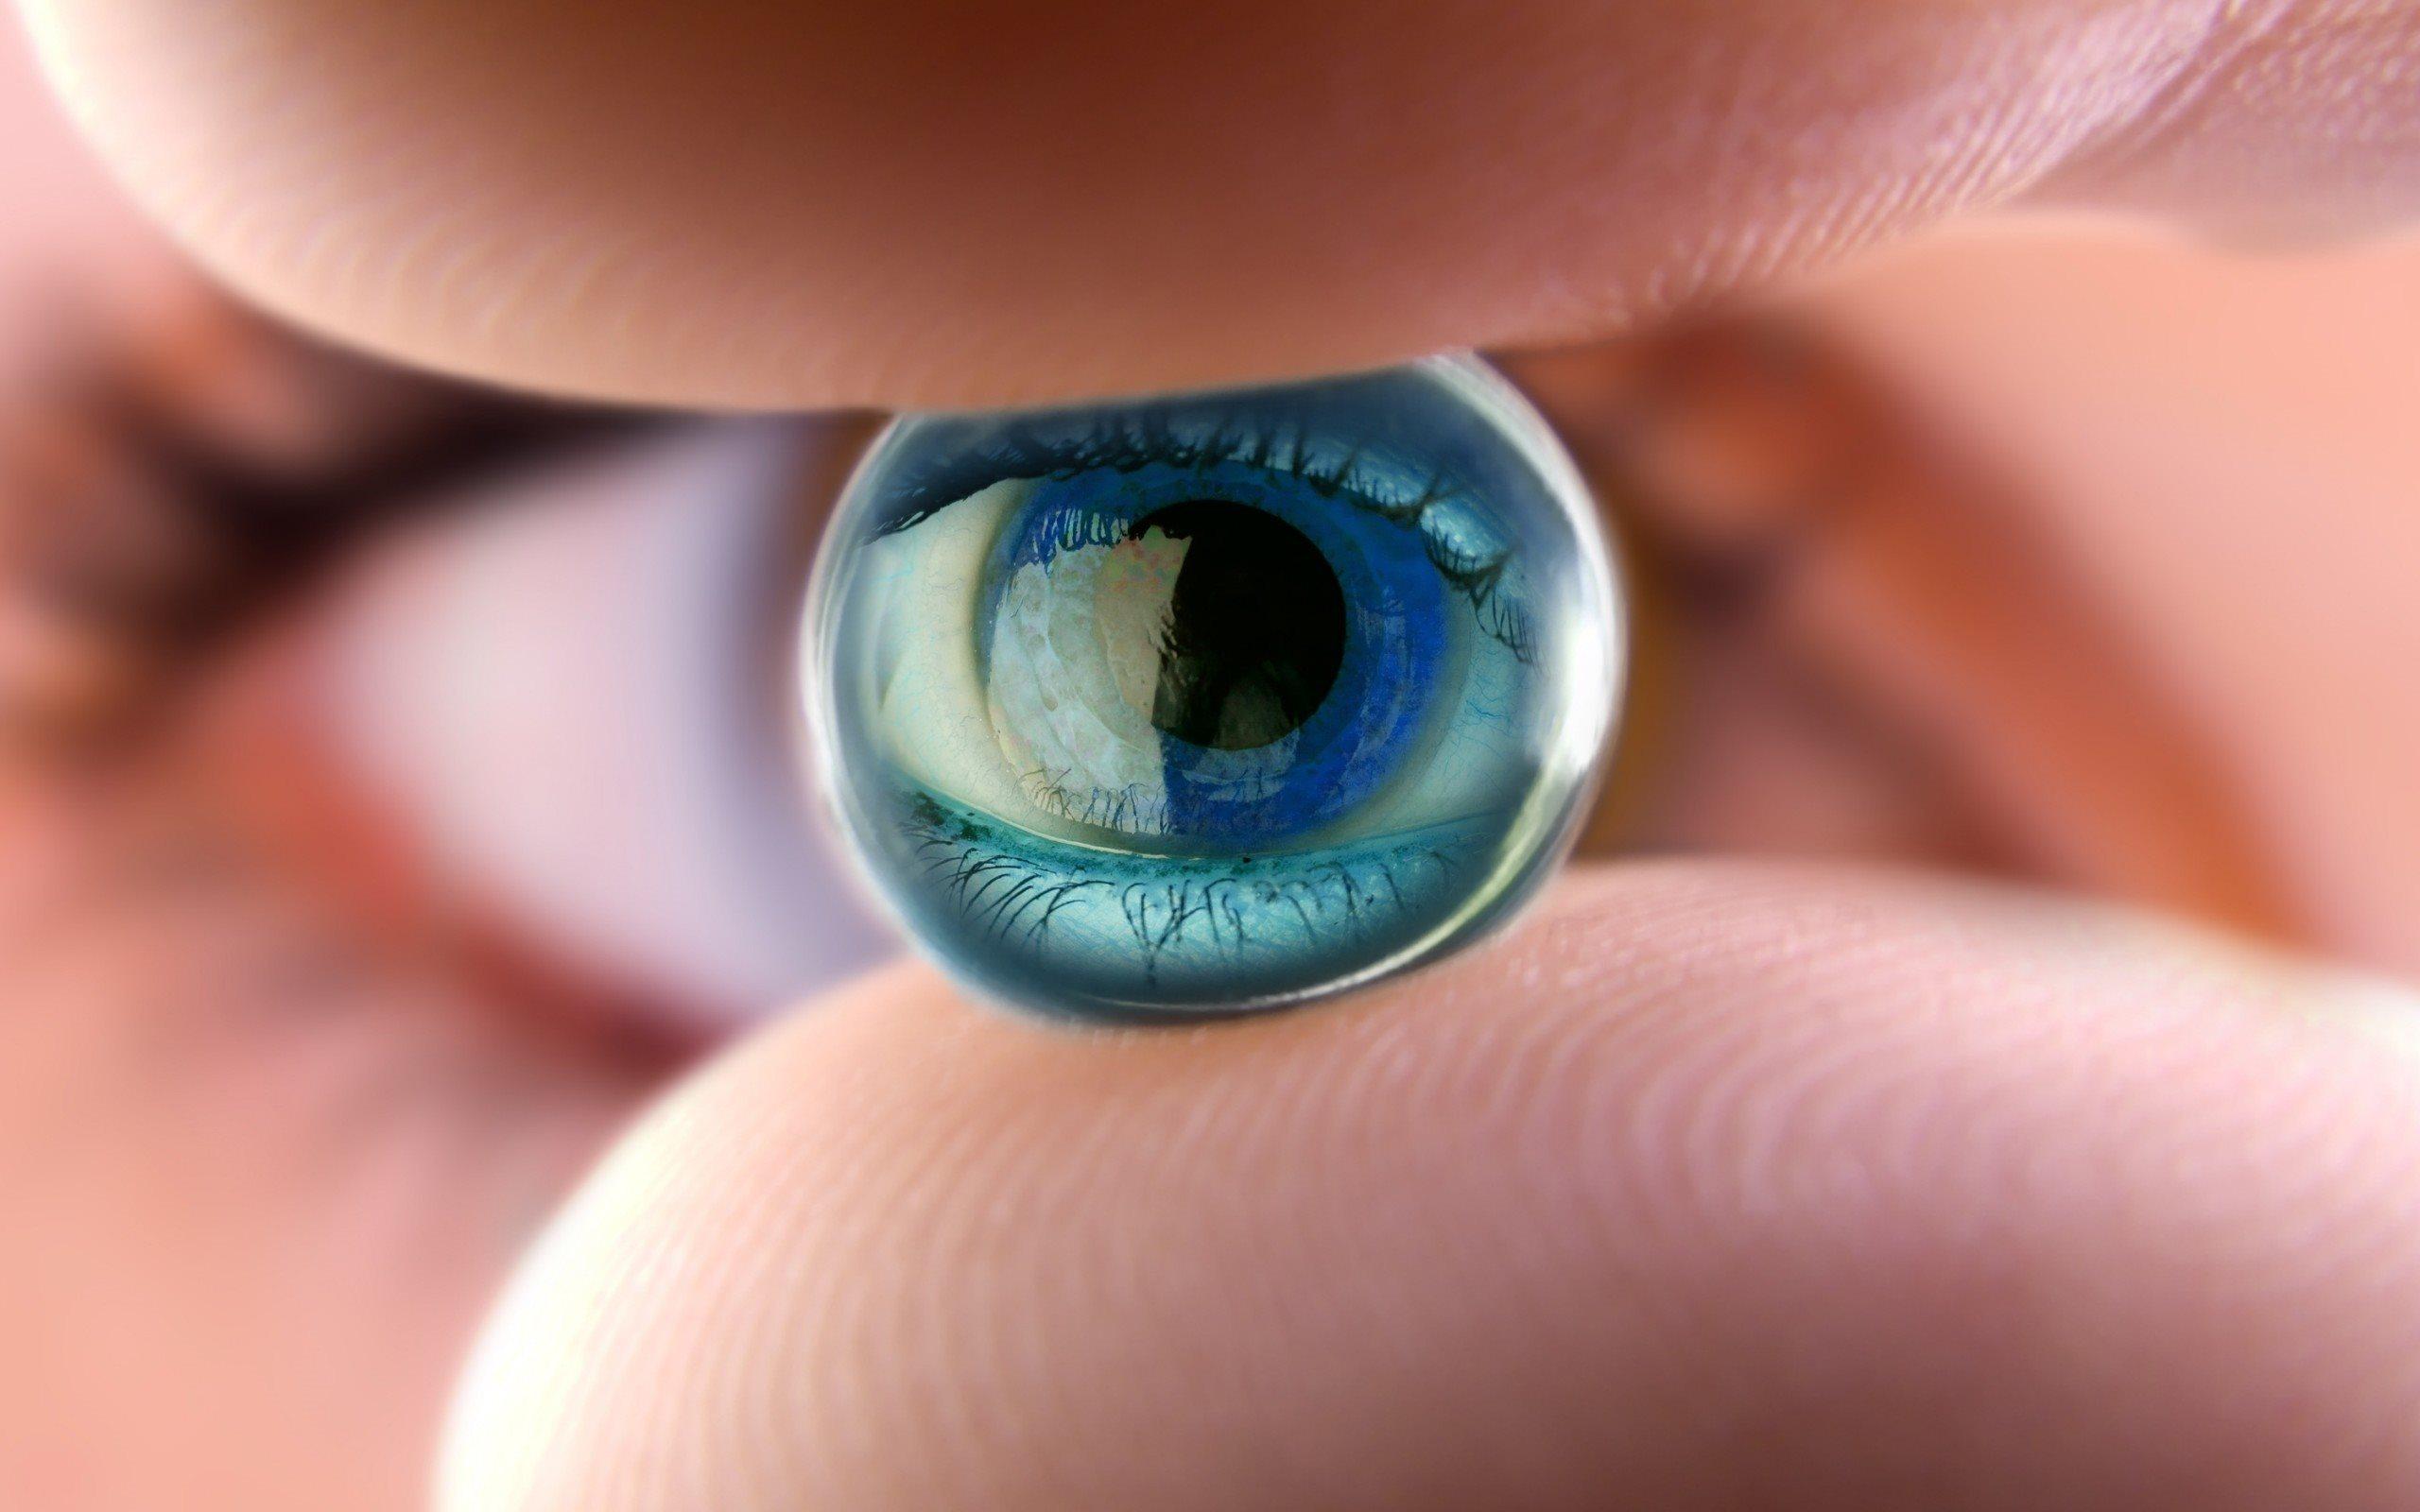 Download wallpaper eye lenses, contact lens, vision